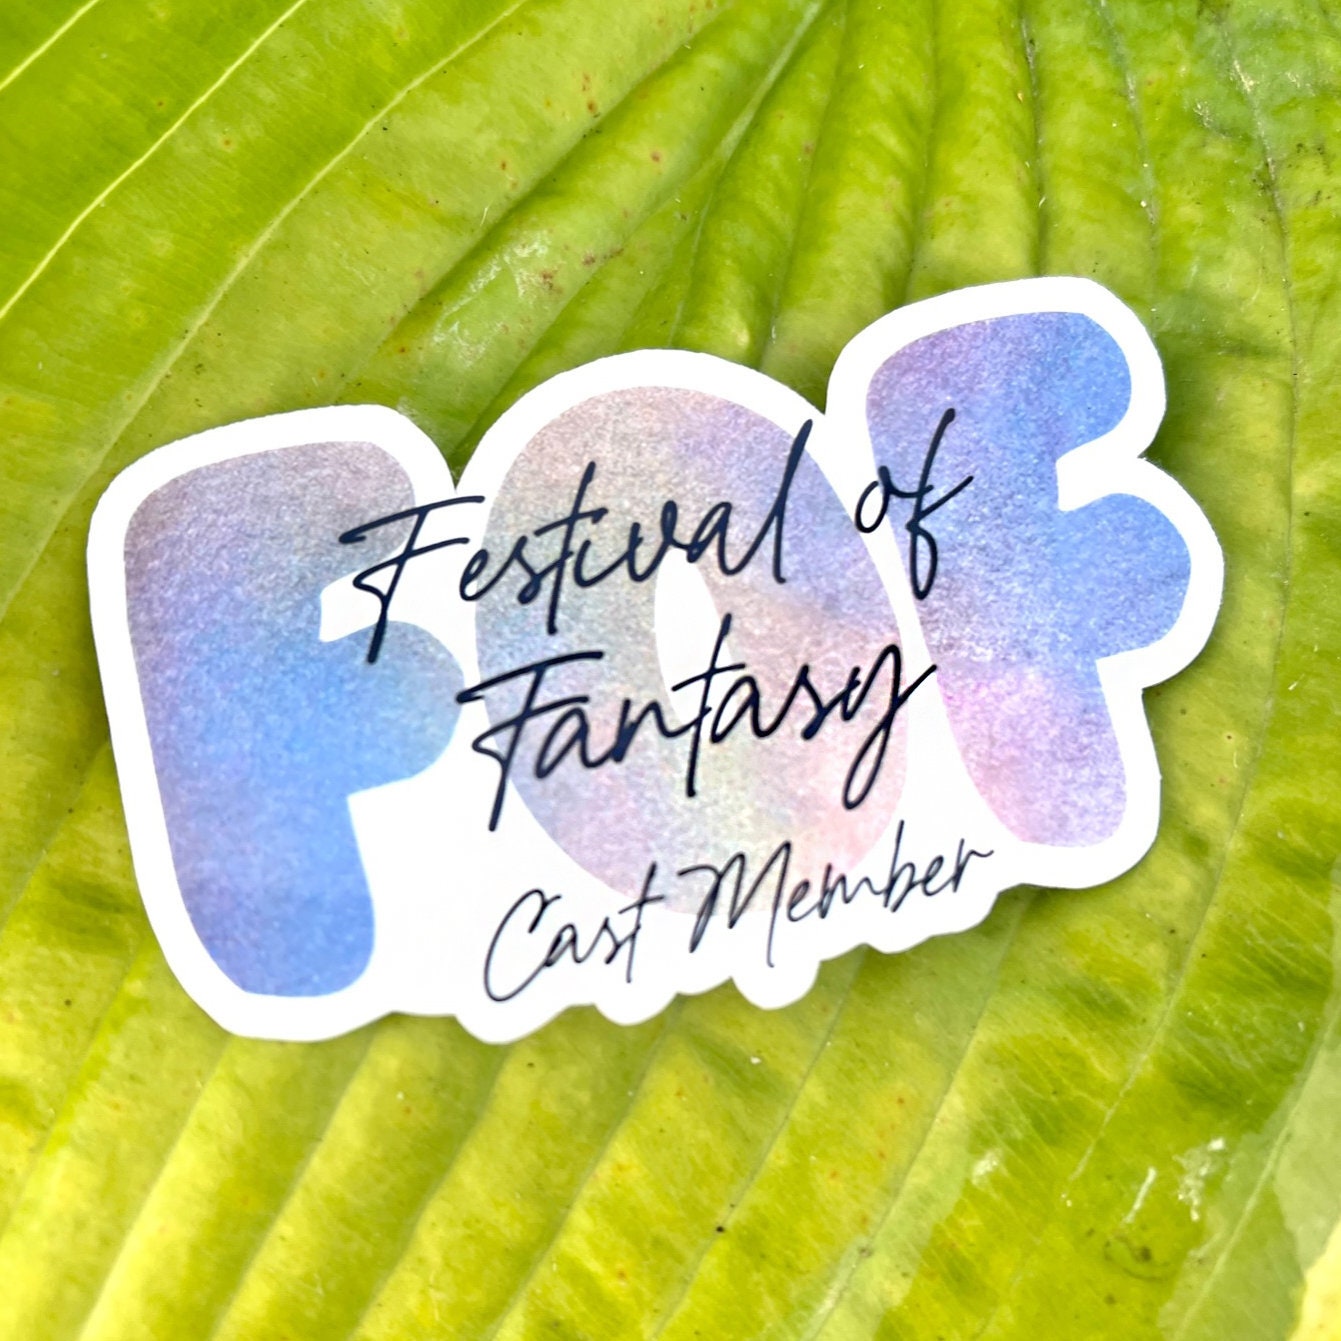 Festival of Fantasy Sticker |  Cast Member Sticker | Disney Parades